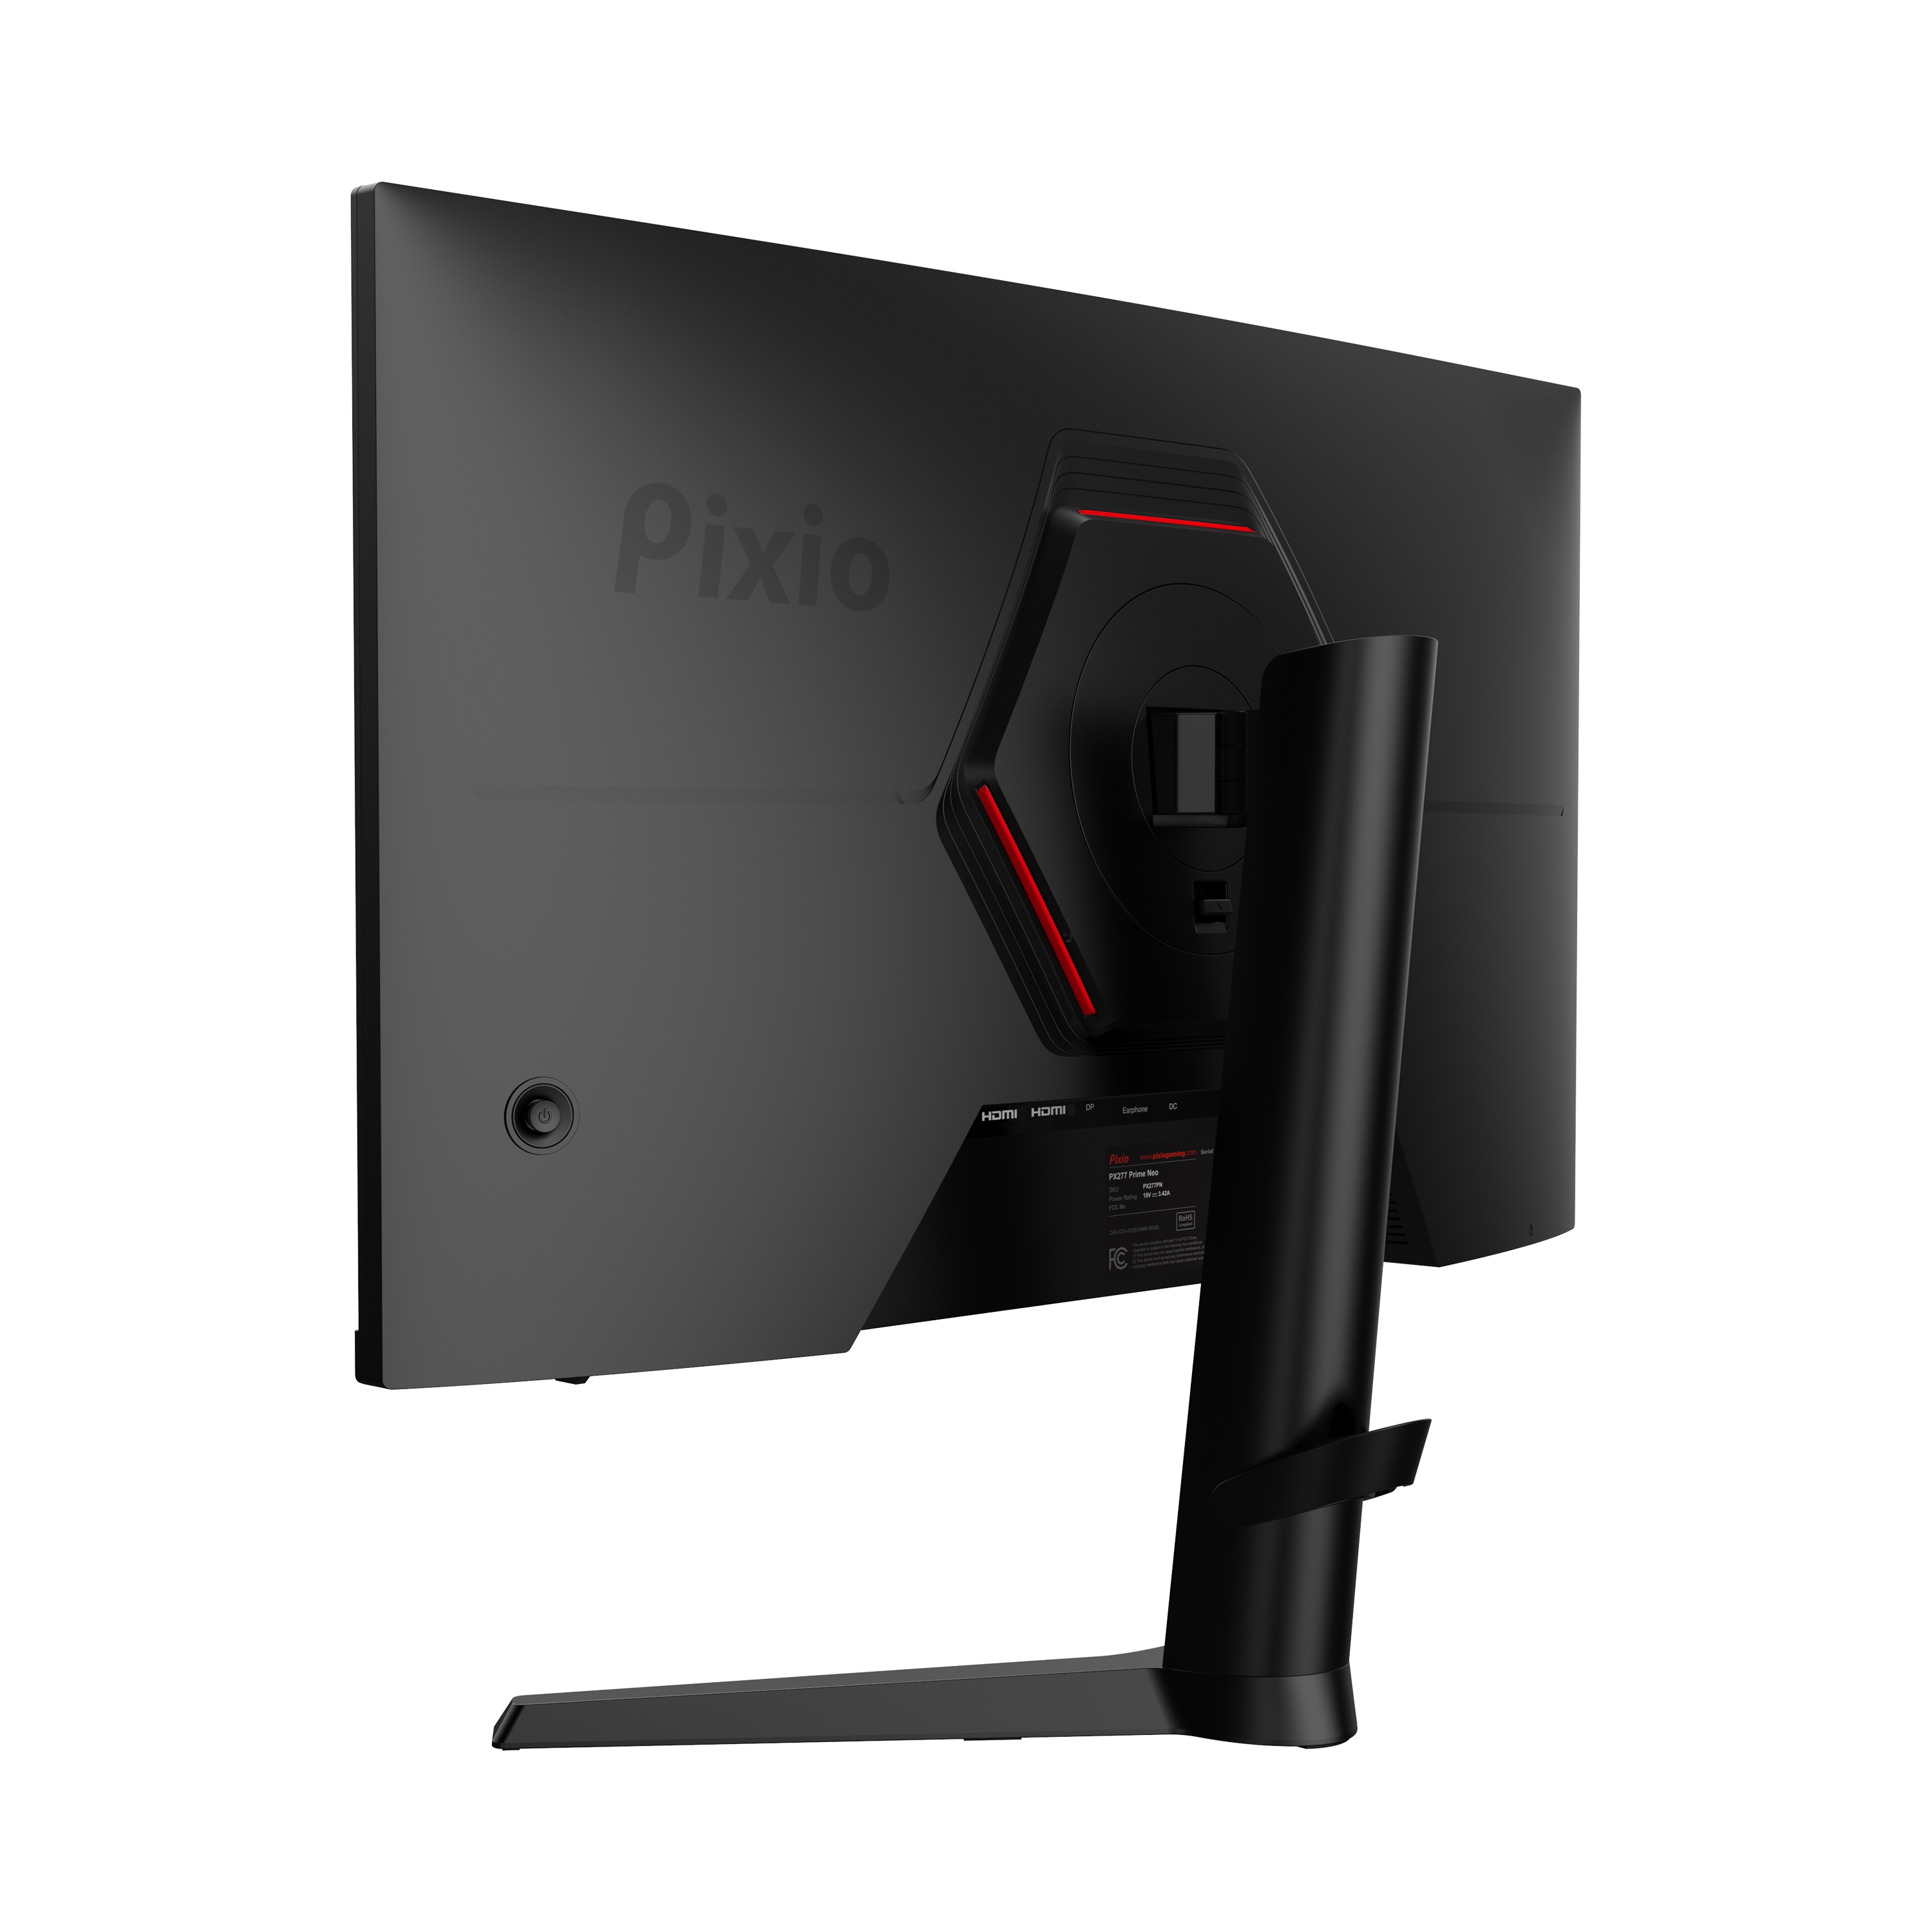 Pixio PX277 Prime Neo Gaming Monitor